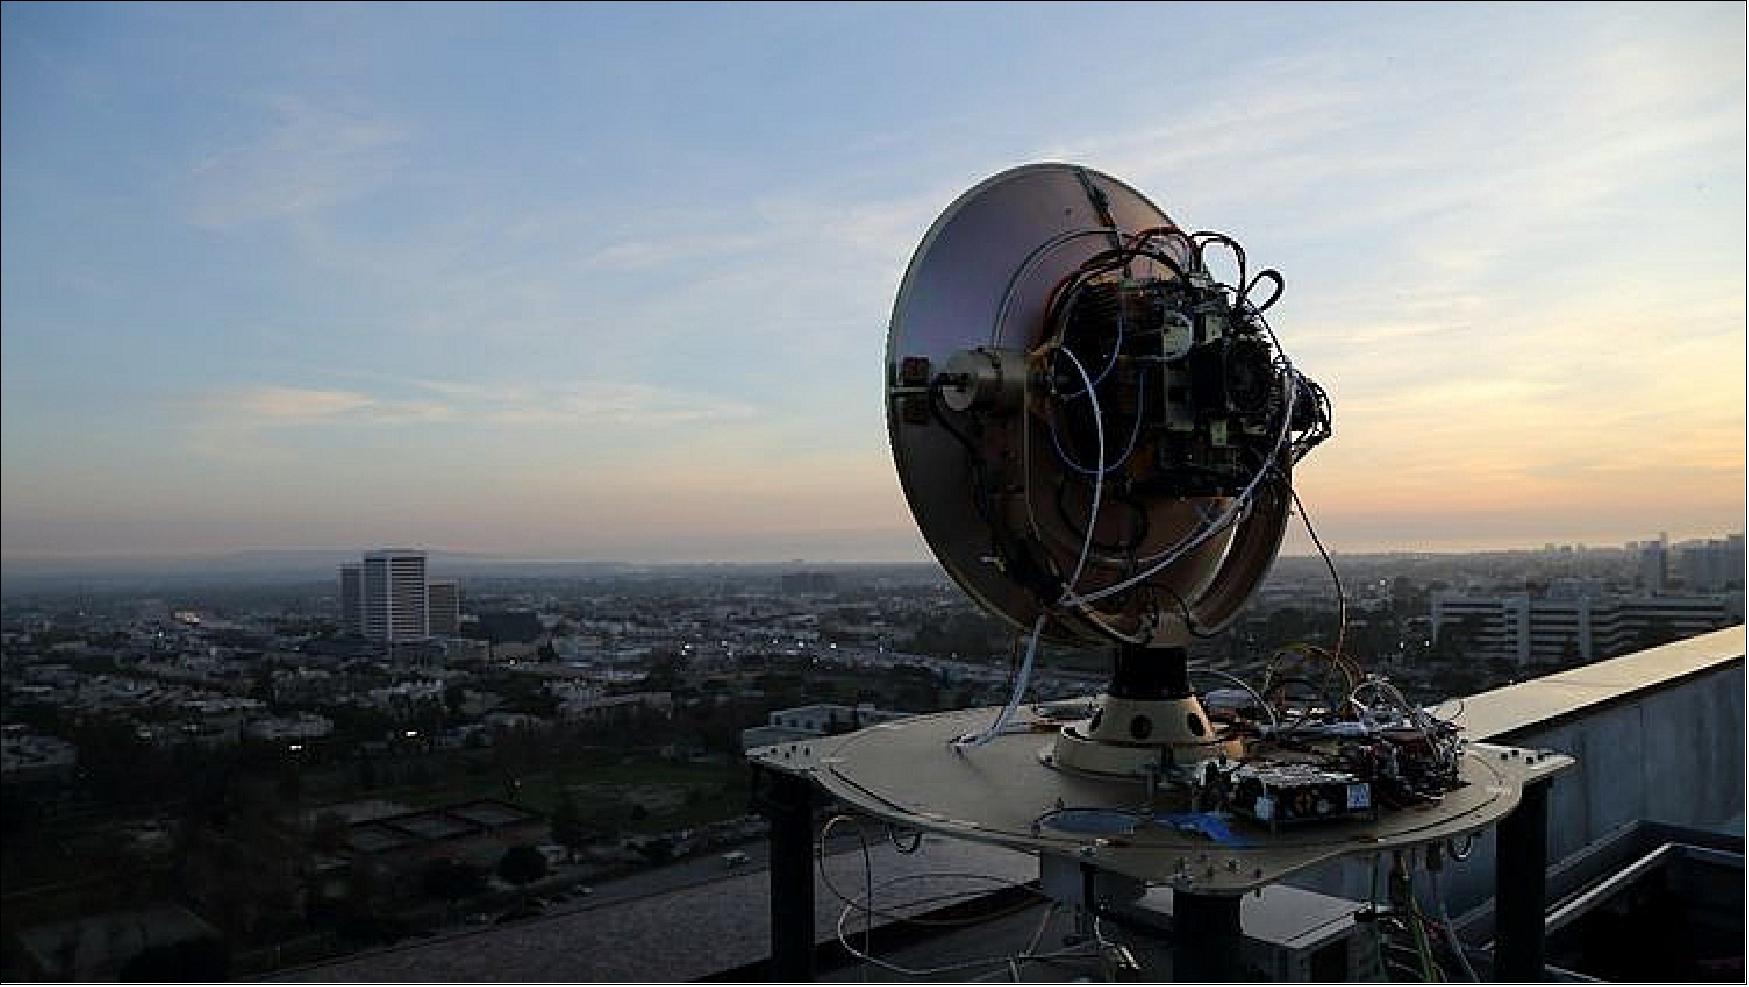 Figure 86: Northrop Grumman and DARPA 100 Gbit/s link demonstrated over 20 km city environment on 19 January 2018 in Los Angeles (image credit: Northrop Grumman)